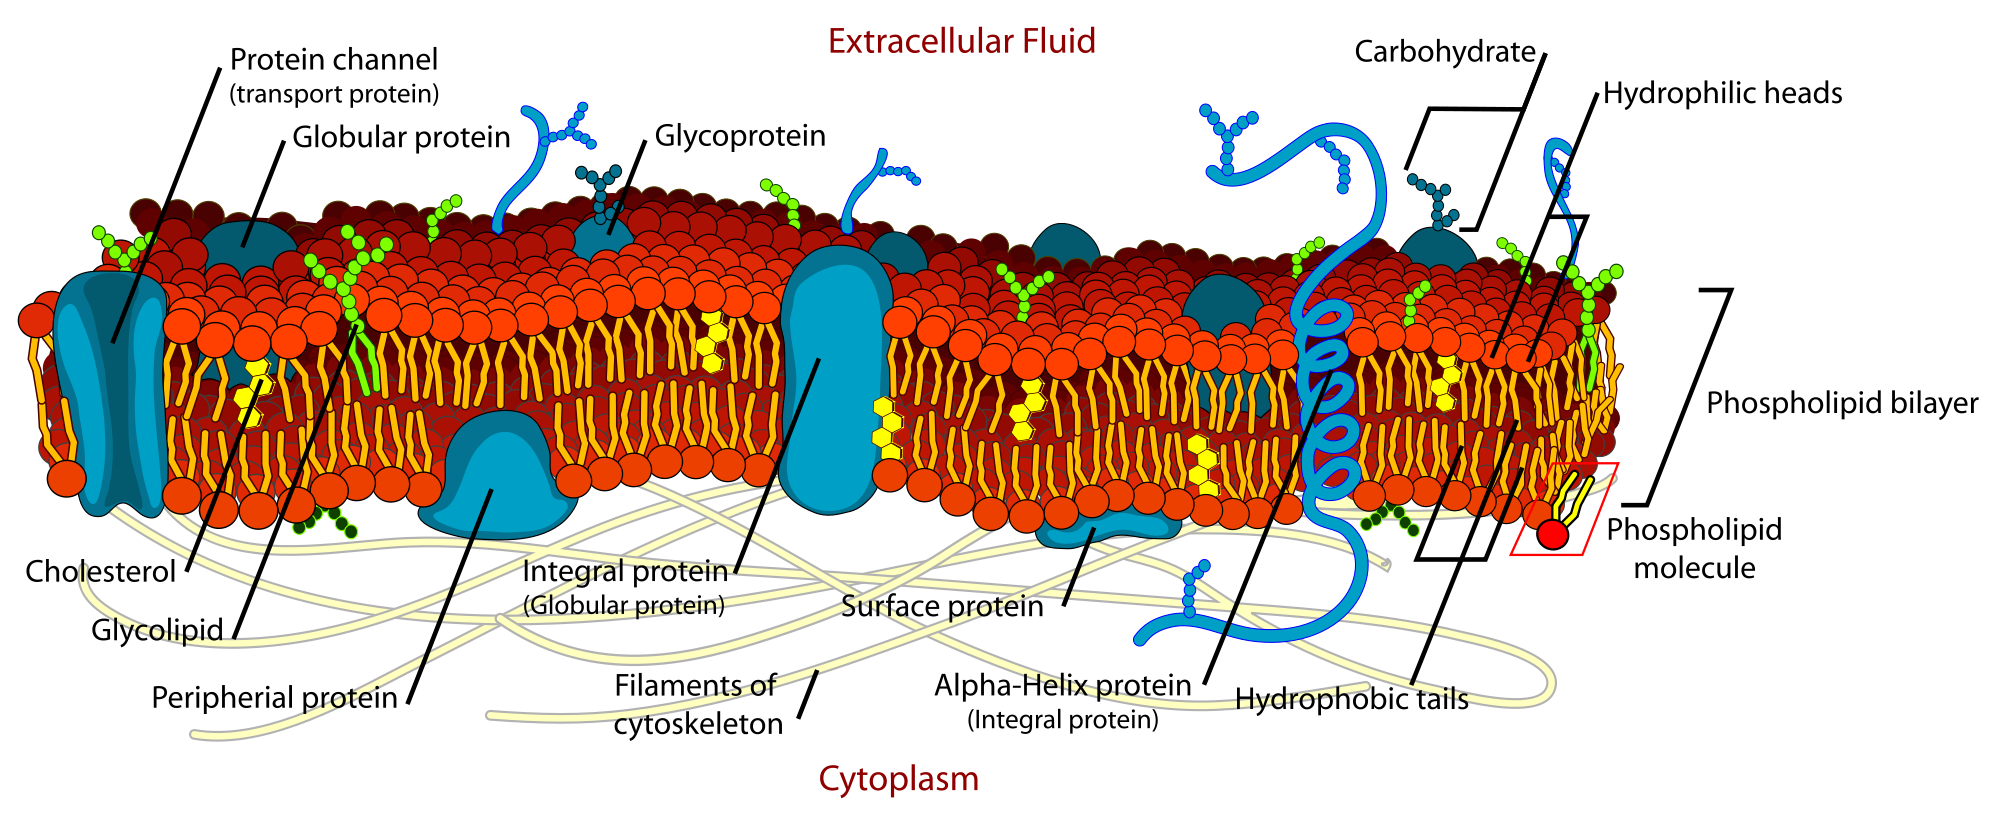 (http://upload.wikimedia.org/wikipedia/commons/thumb/d/da/Cell_membrane_detailed_diagram_en.svg/2000px-Cell_membrane_detailed_diagram_en.svg.png)